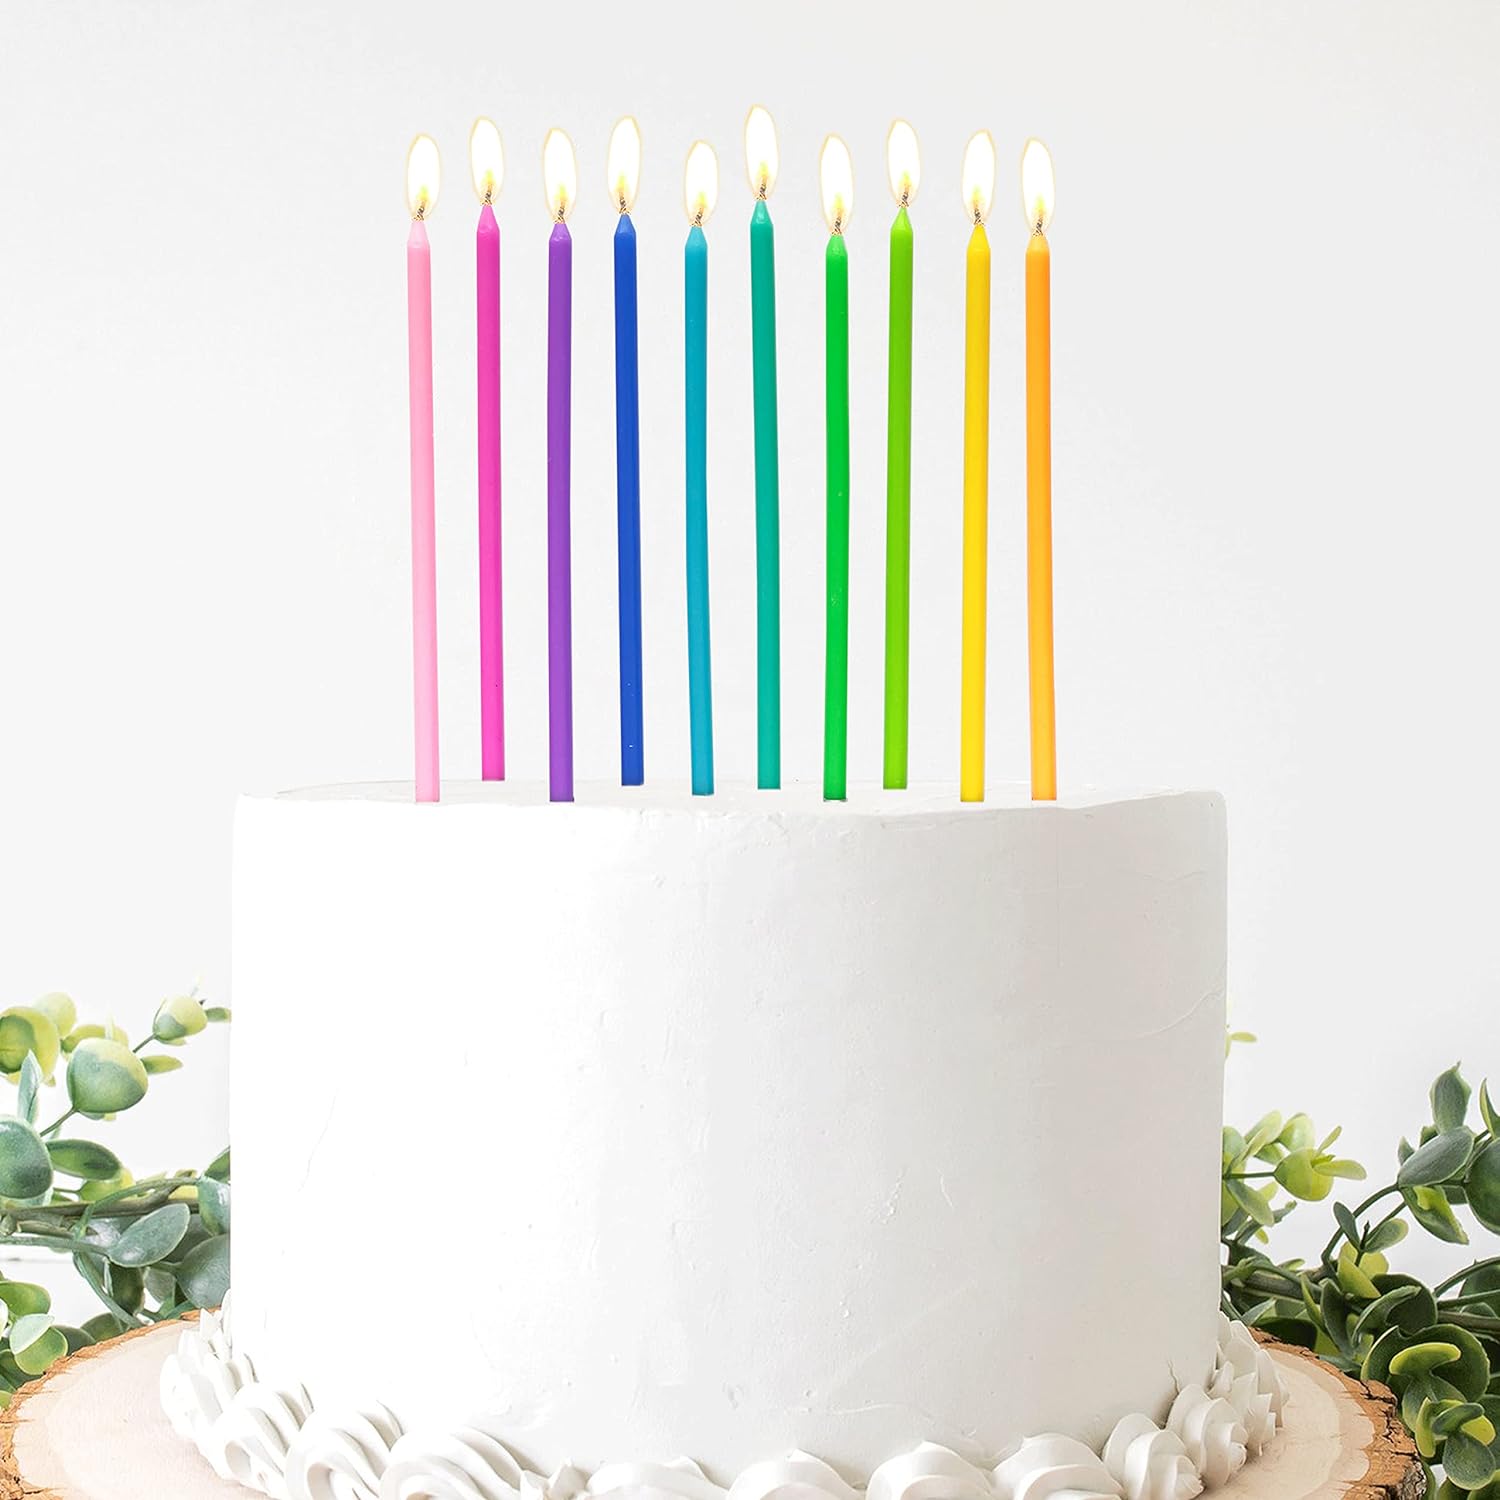 Apluselection 40-Count Rainbow Birthday Candles